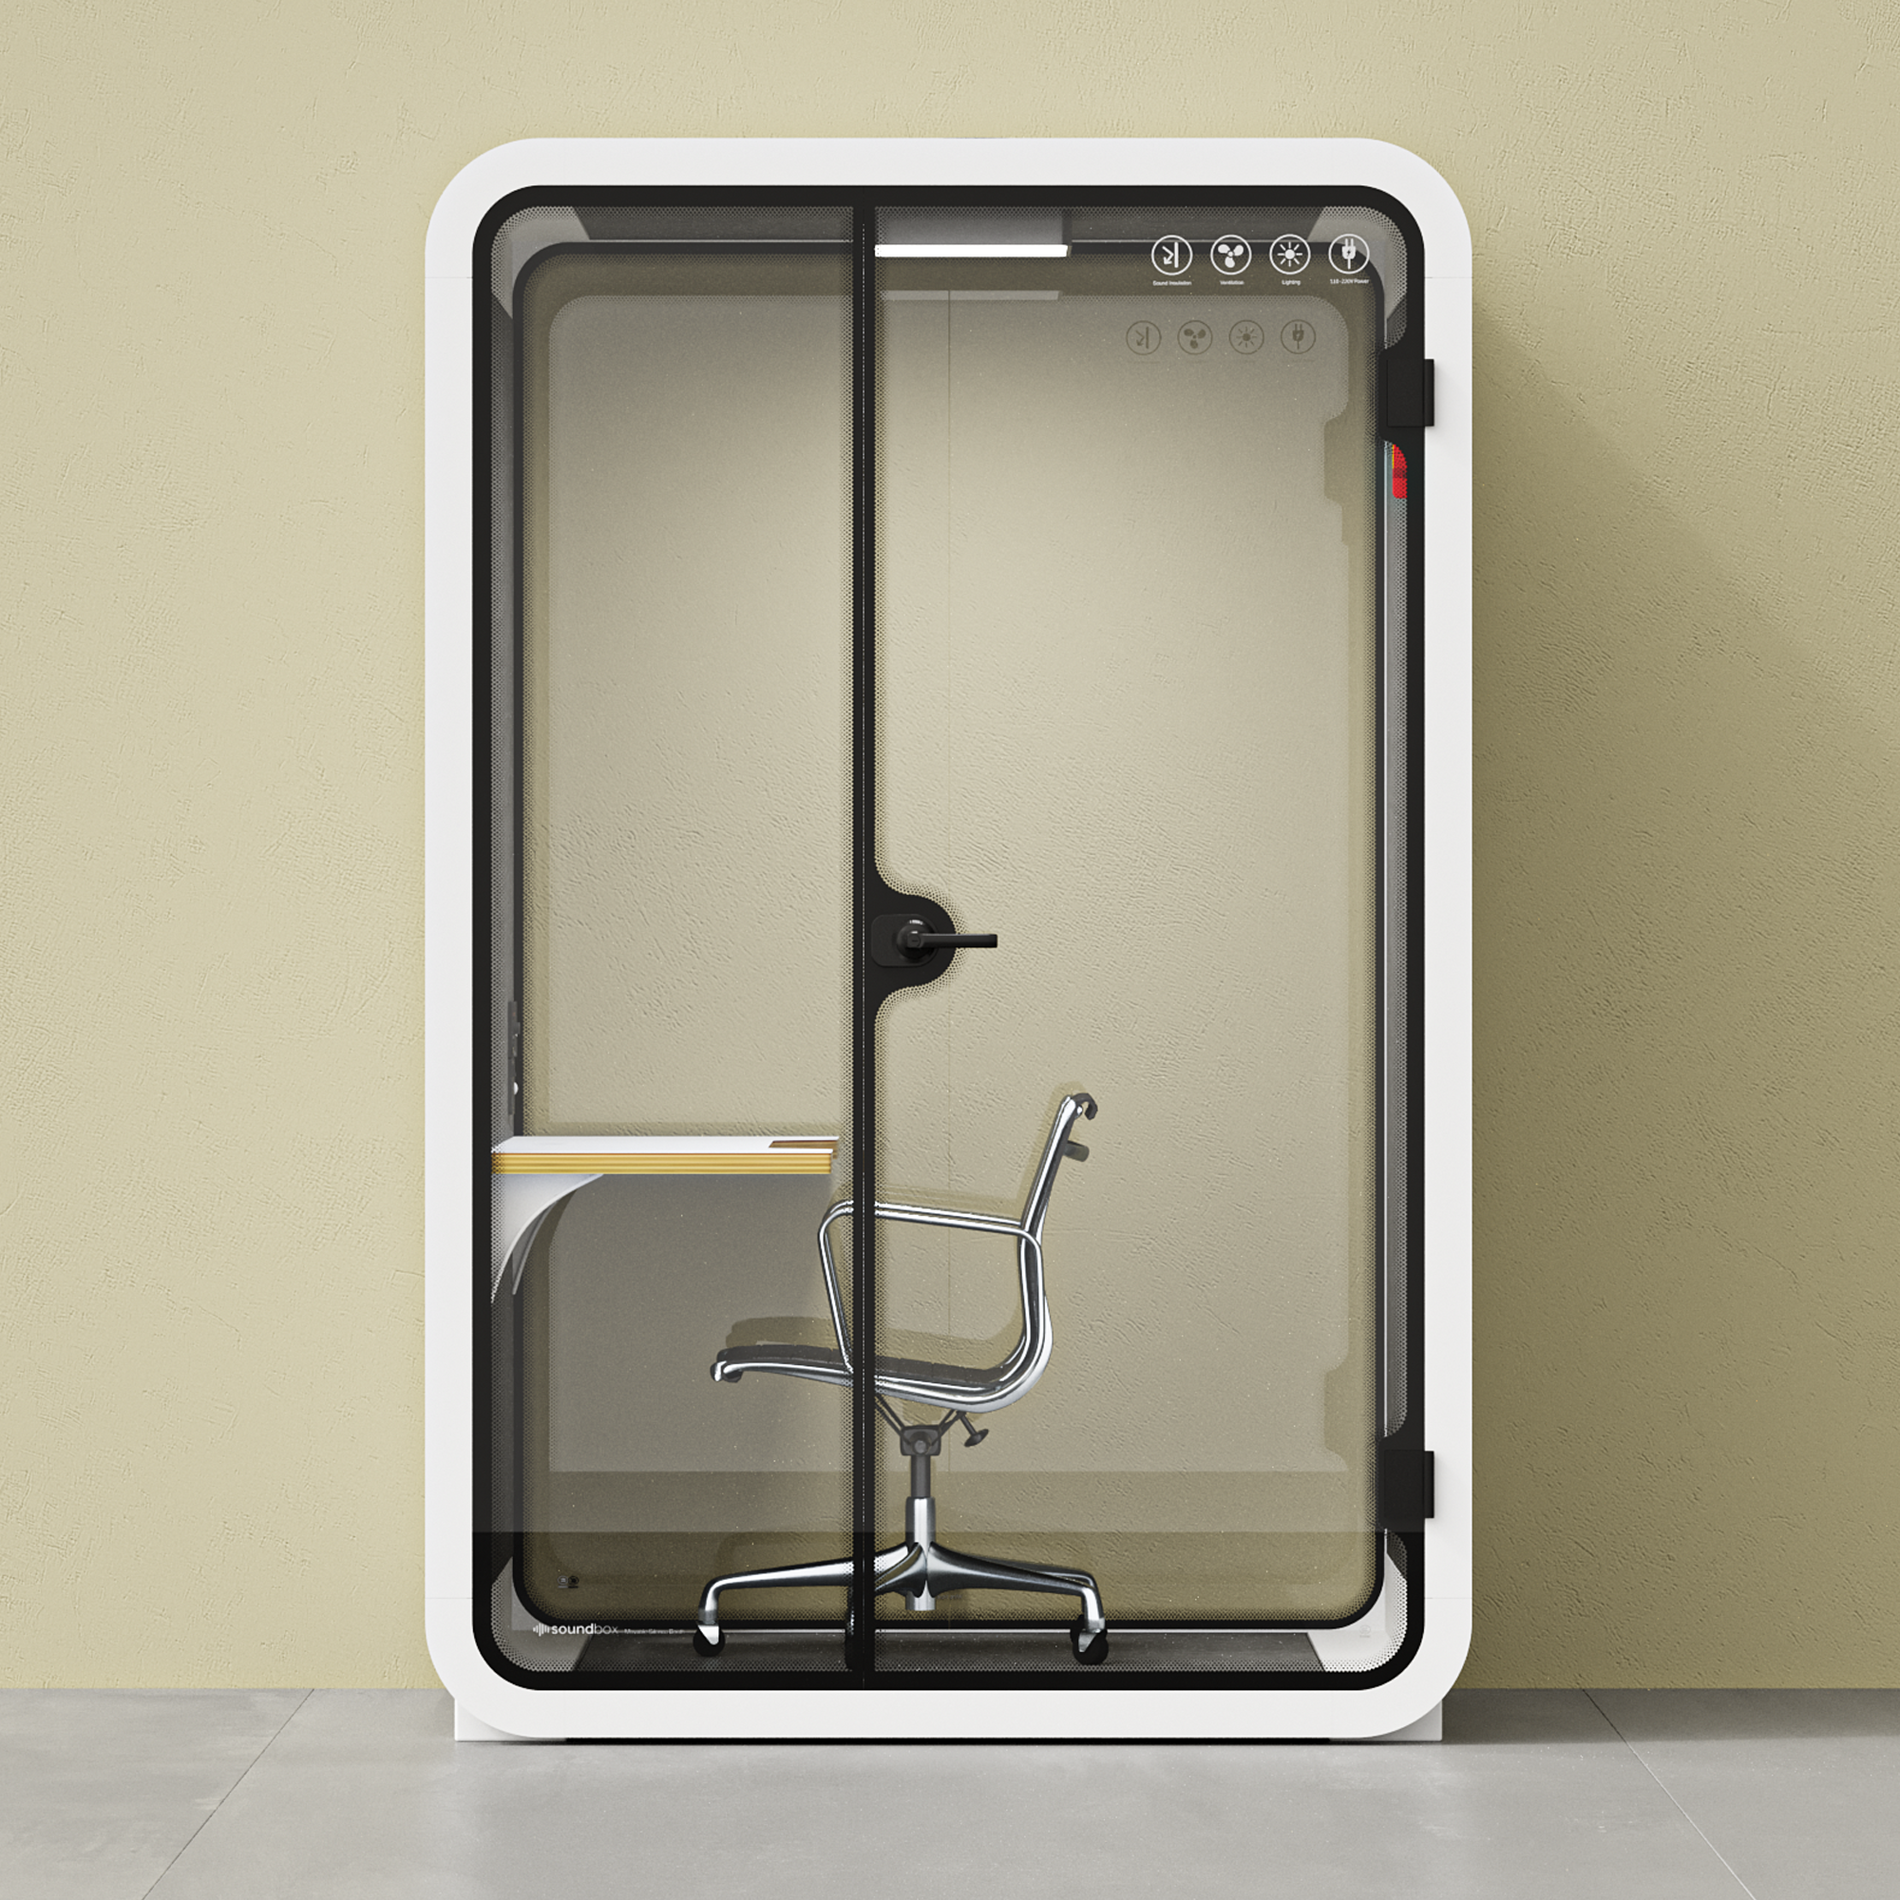 Quell Caseta de Oficina para Dos PersonasWhite / Dark Gray / Work Station + Designer Office Chair